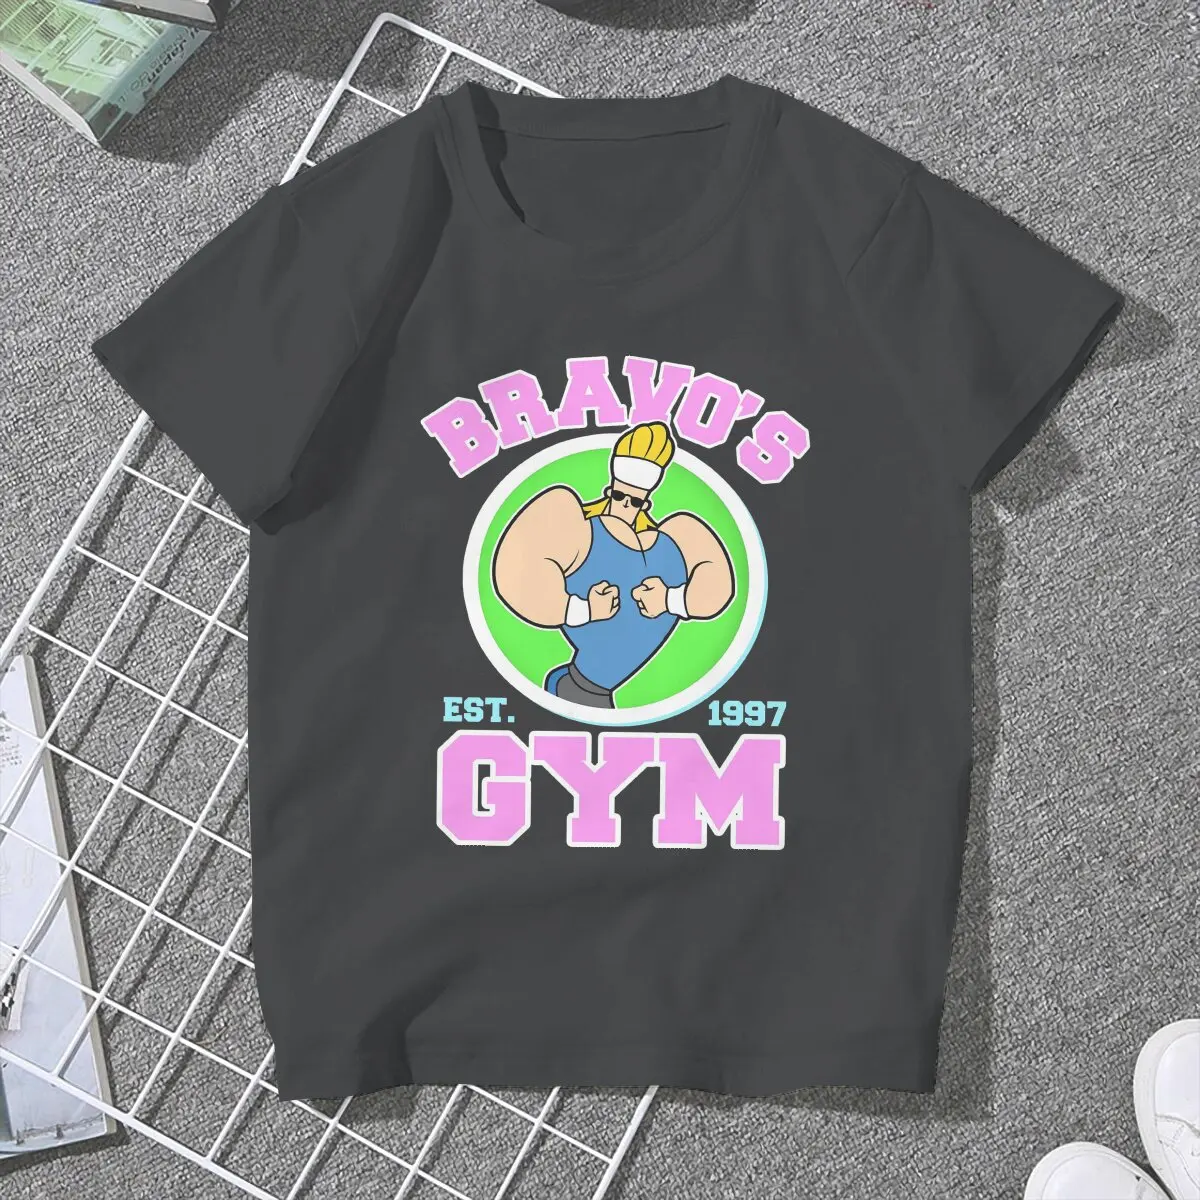 Женская одежда Bravo's Gym с графическим рисунком, футболка с аниме 